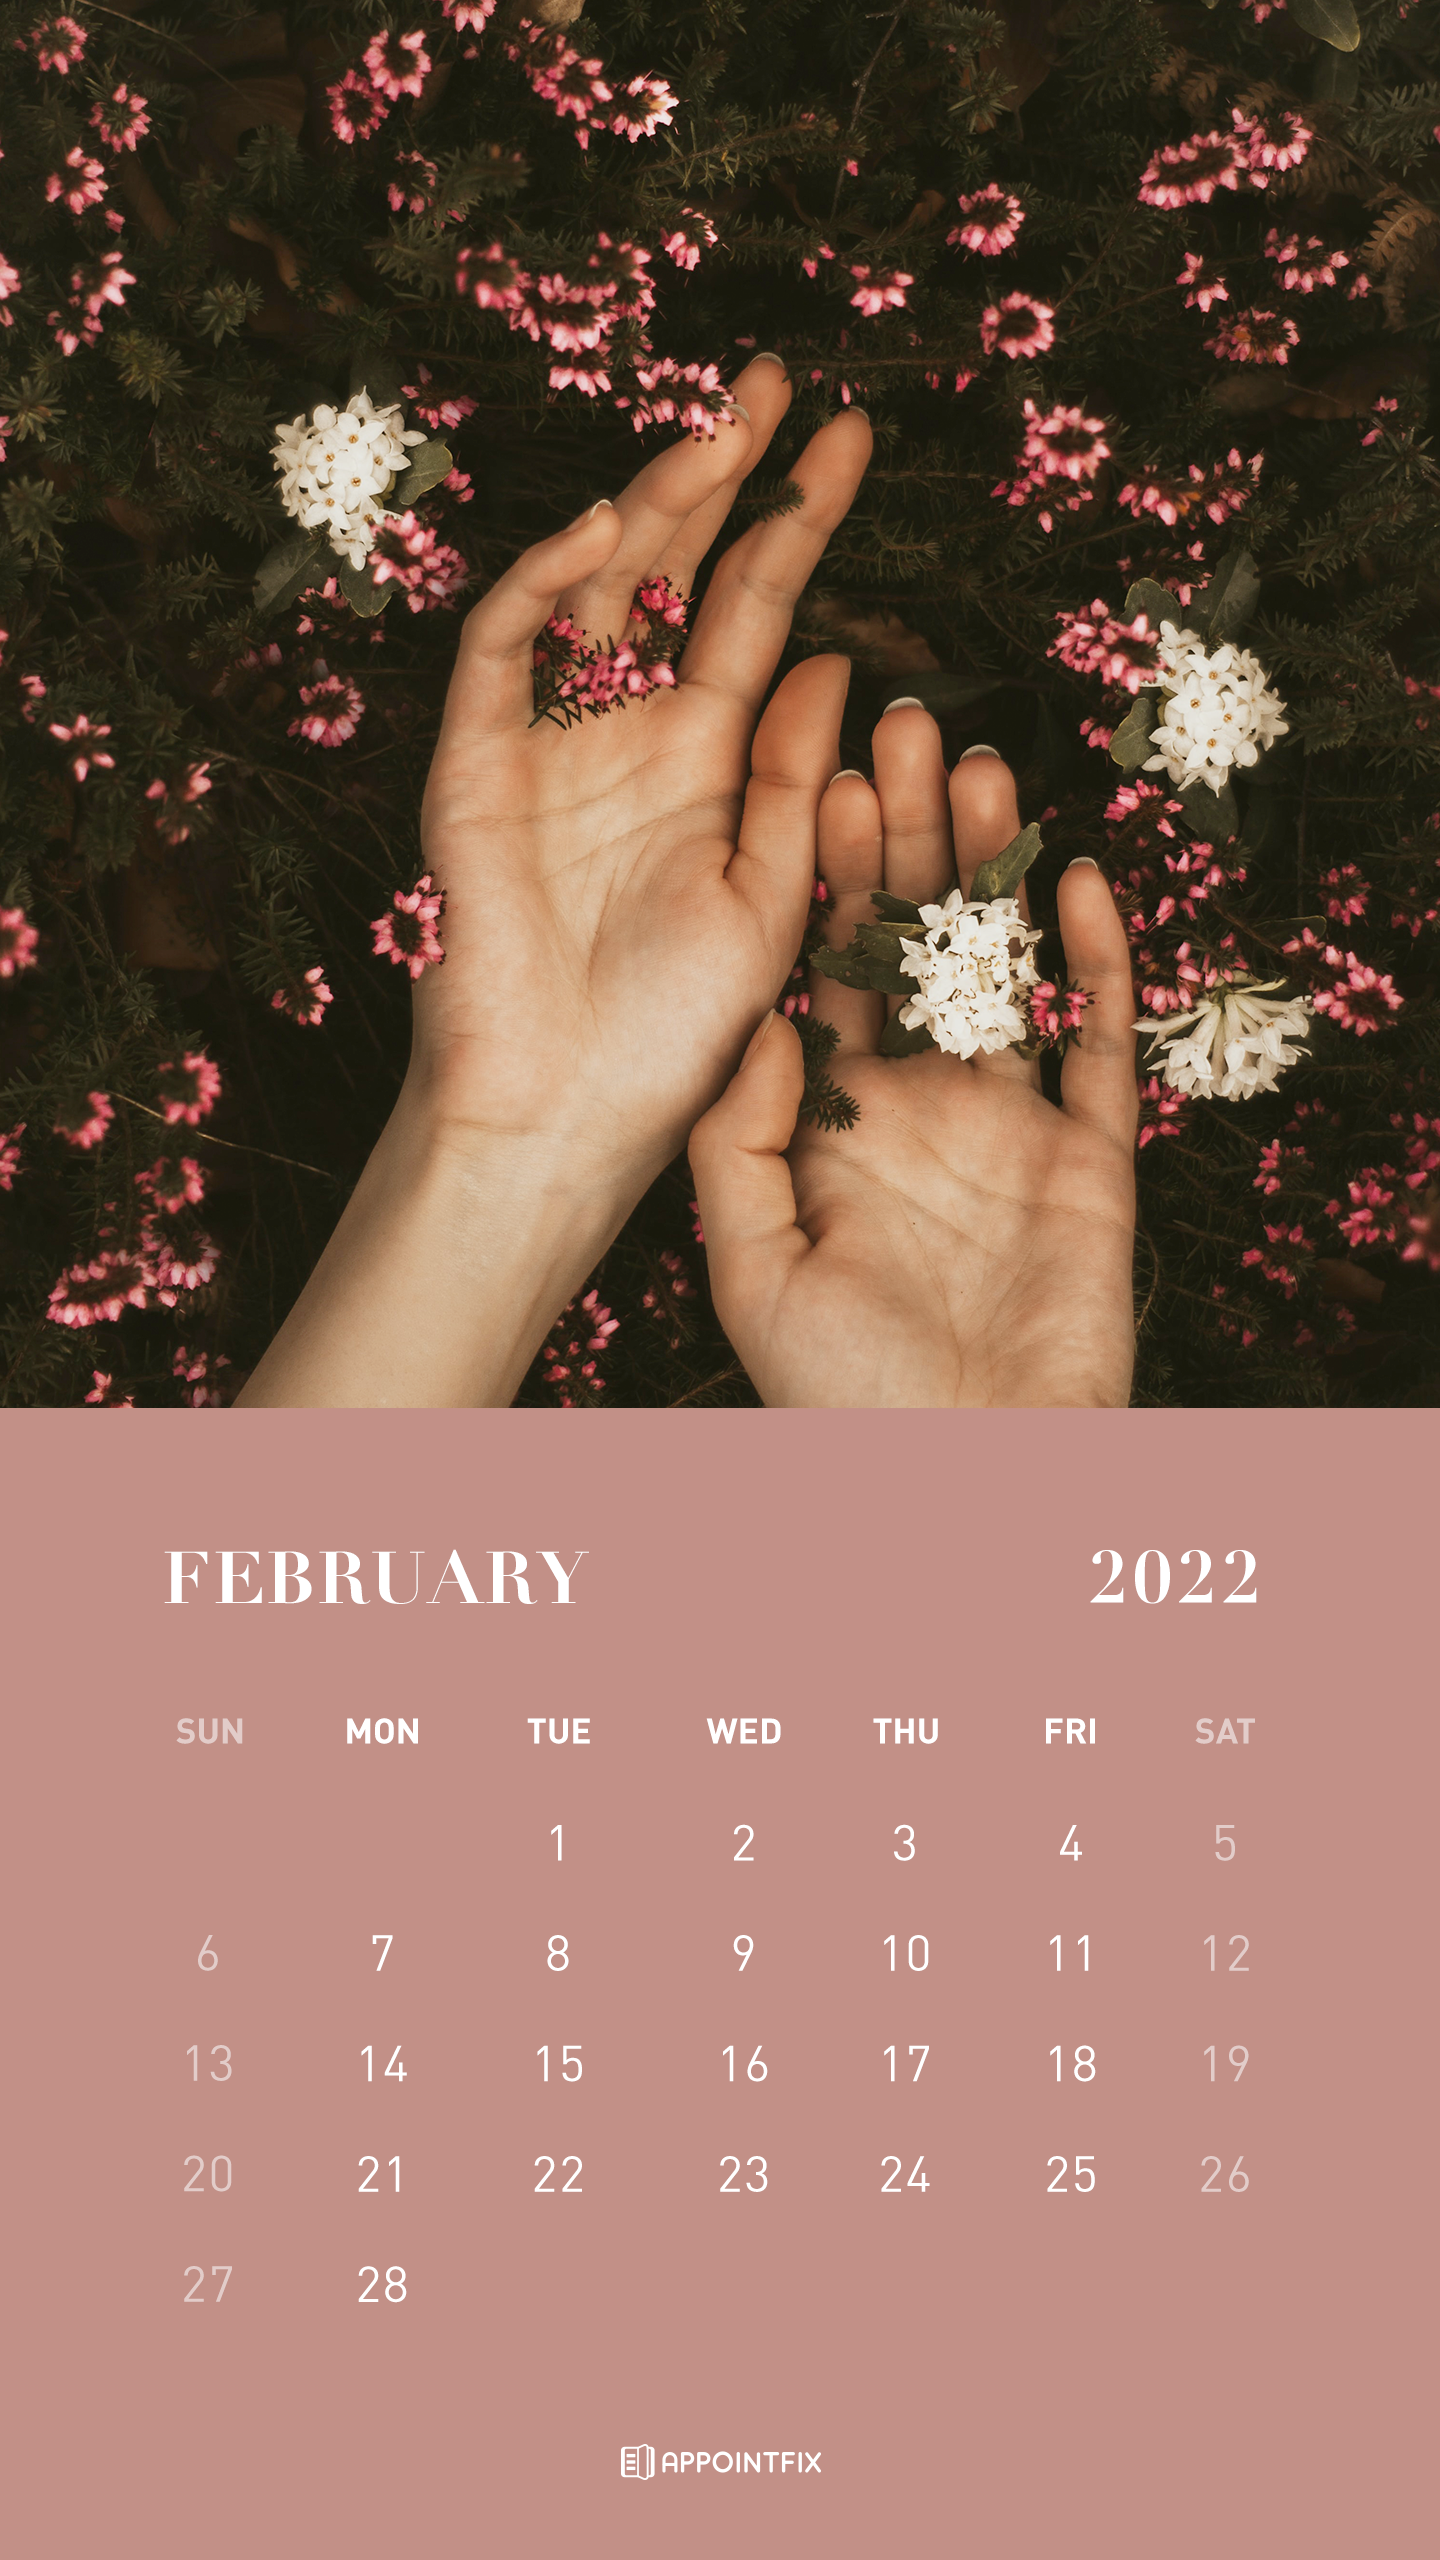 February 2022 Calendar Wallpaper Free February 2022 Calendar Wallpapers – Desktop & Mobile